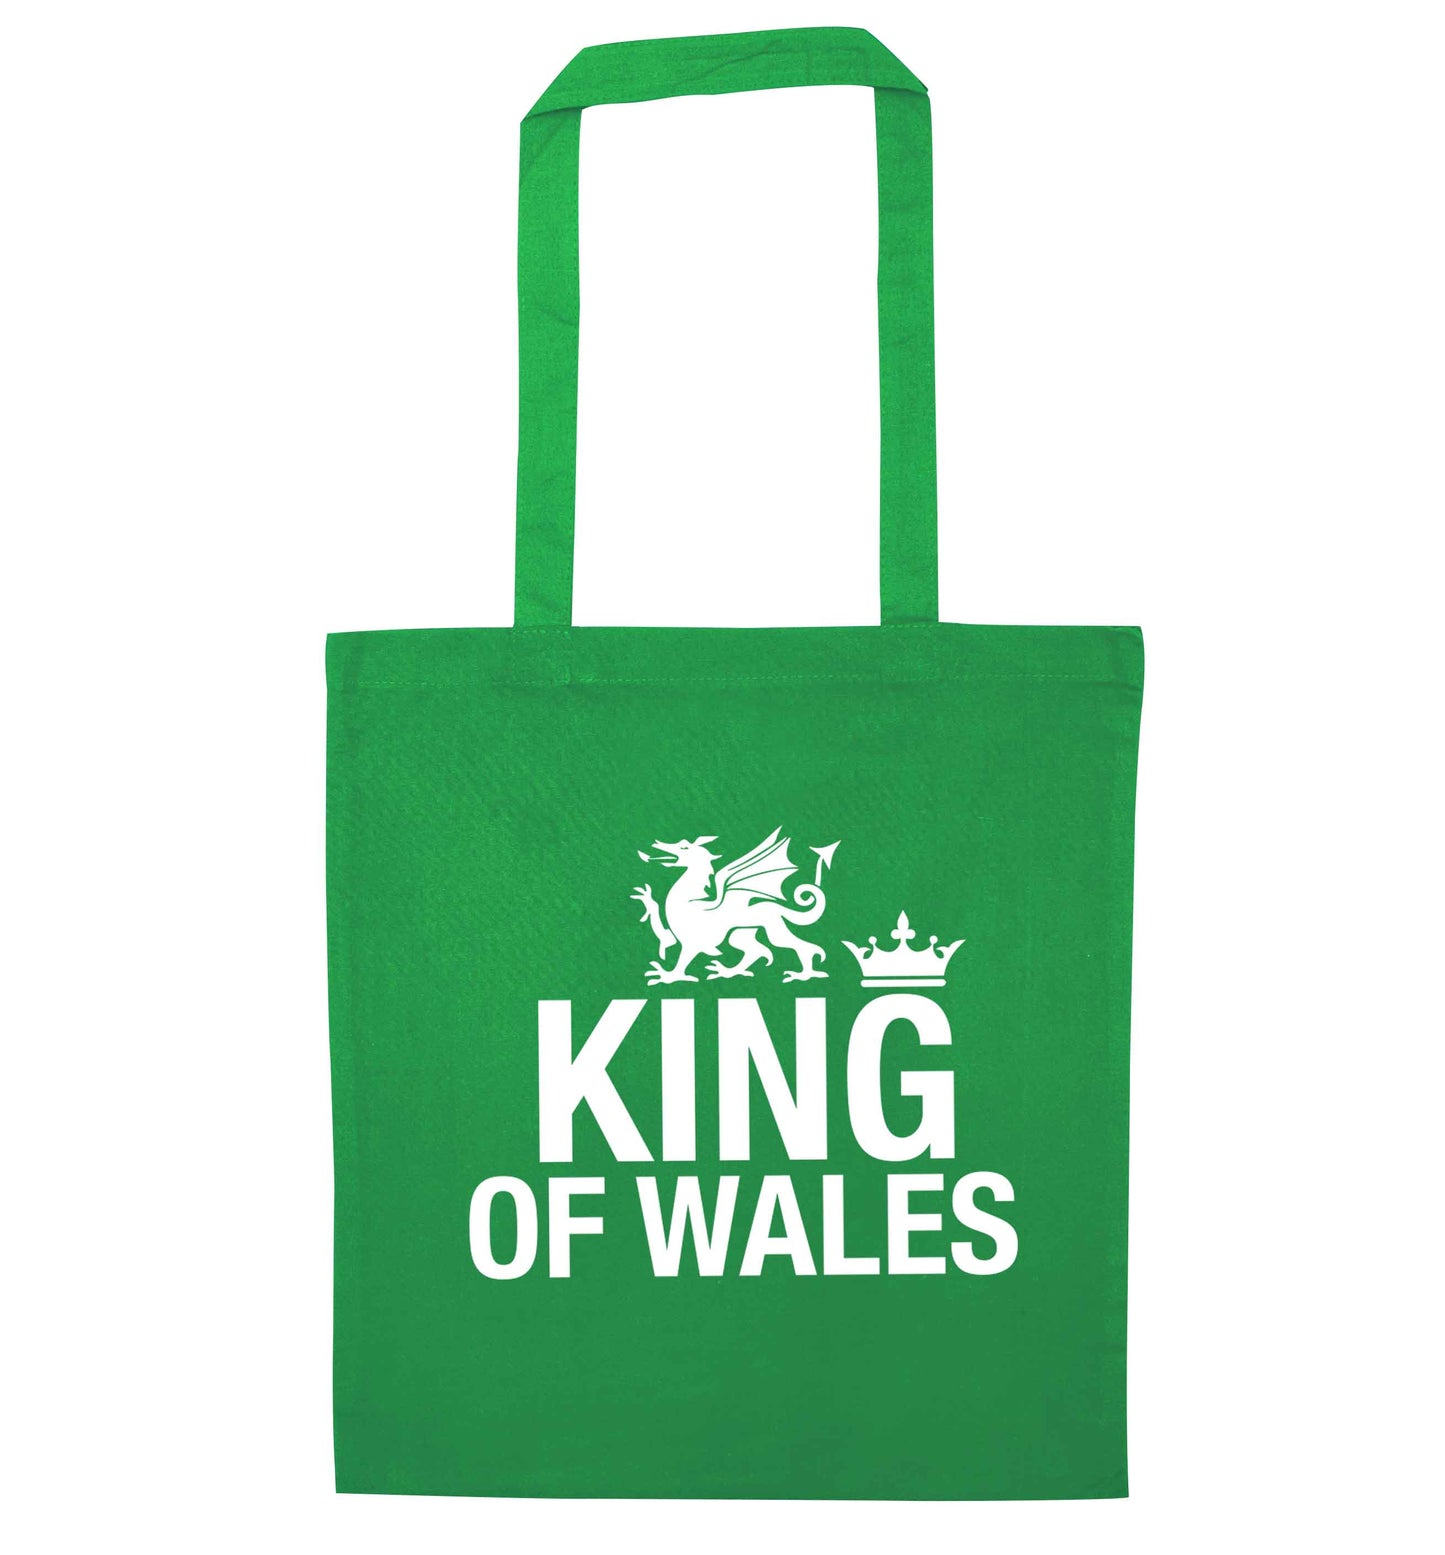 King of Wales green tote bag